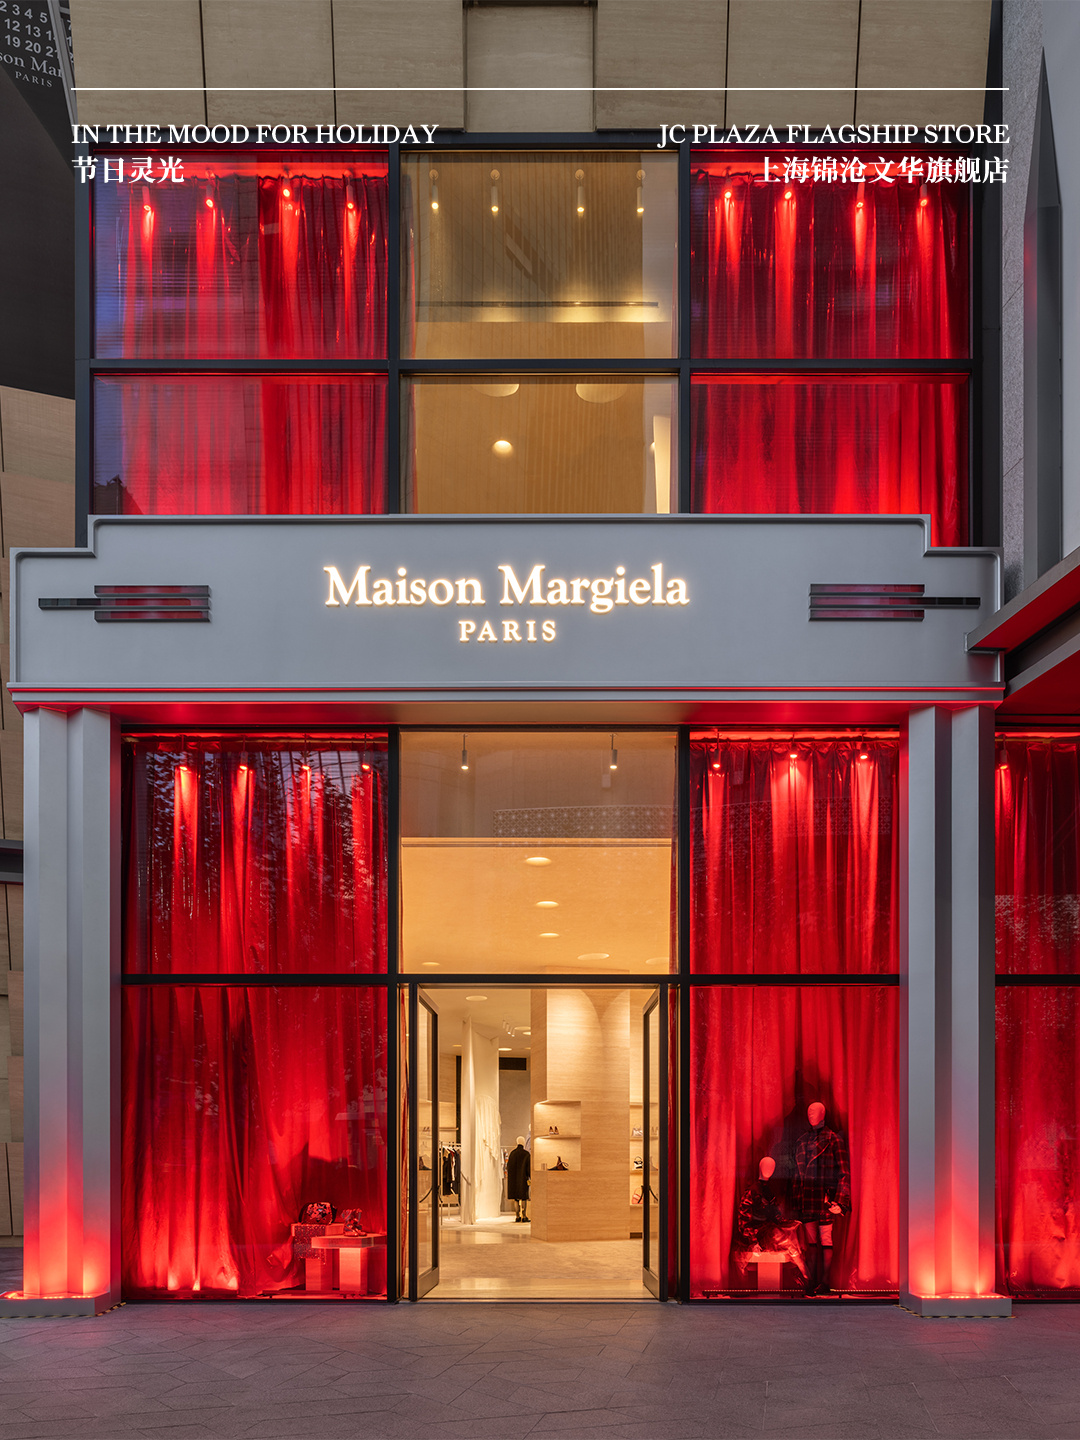 Maison Margiela 开启节日主题展览空间